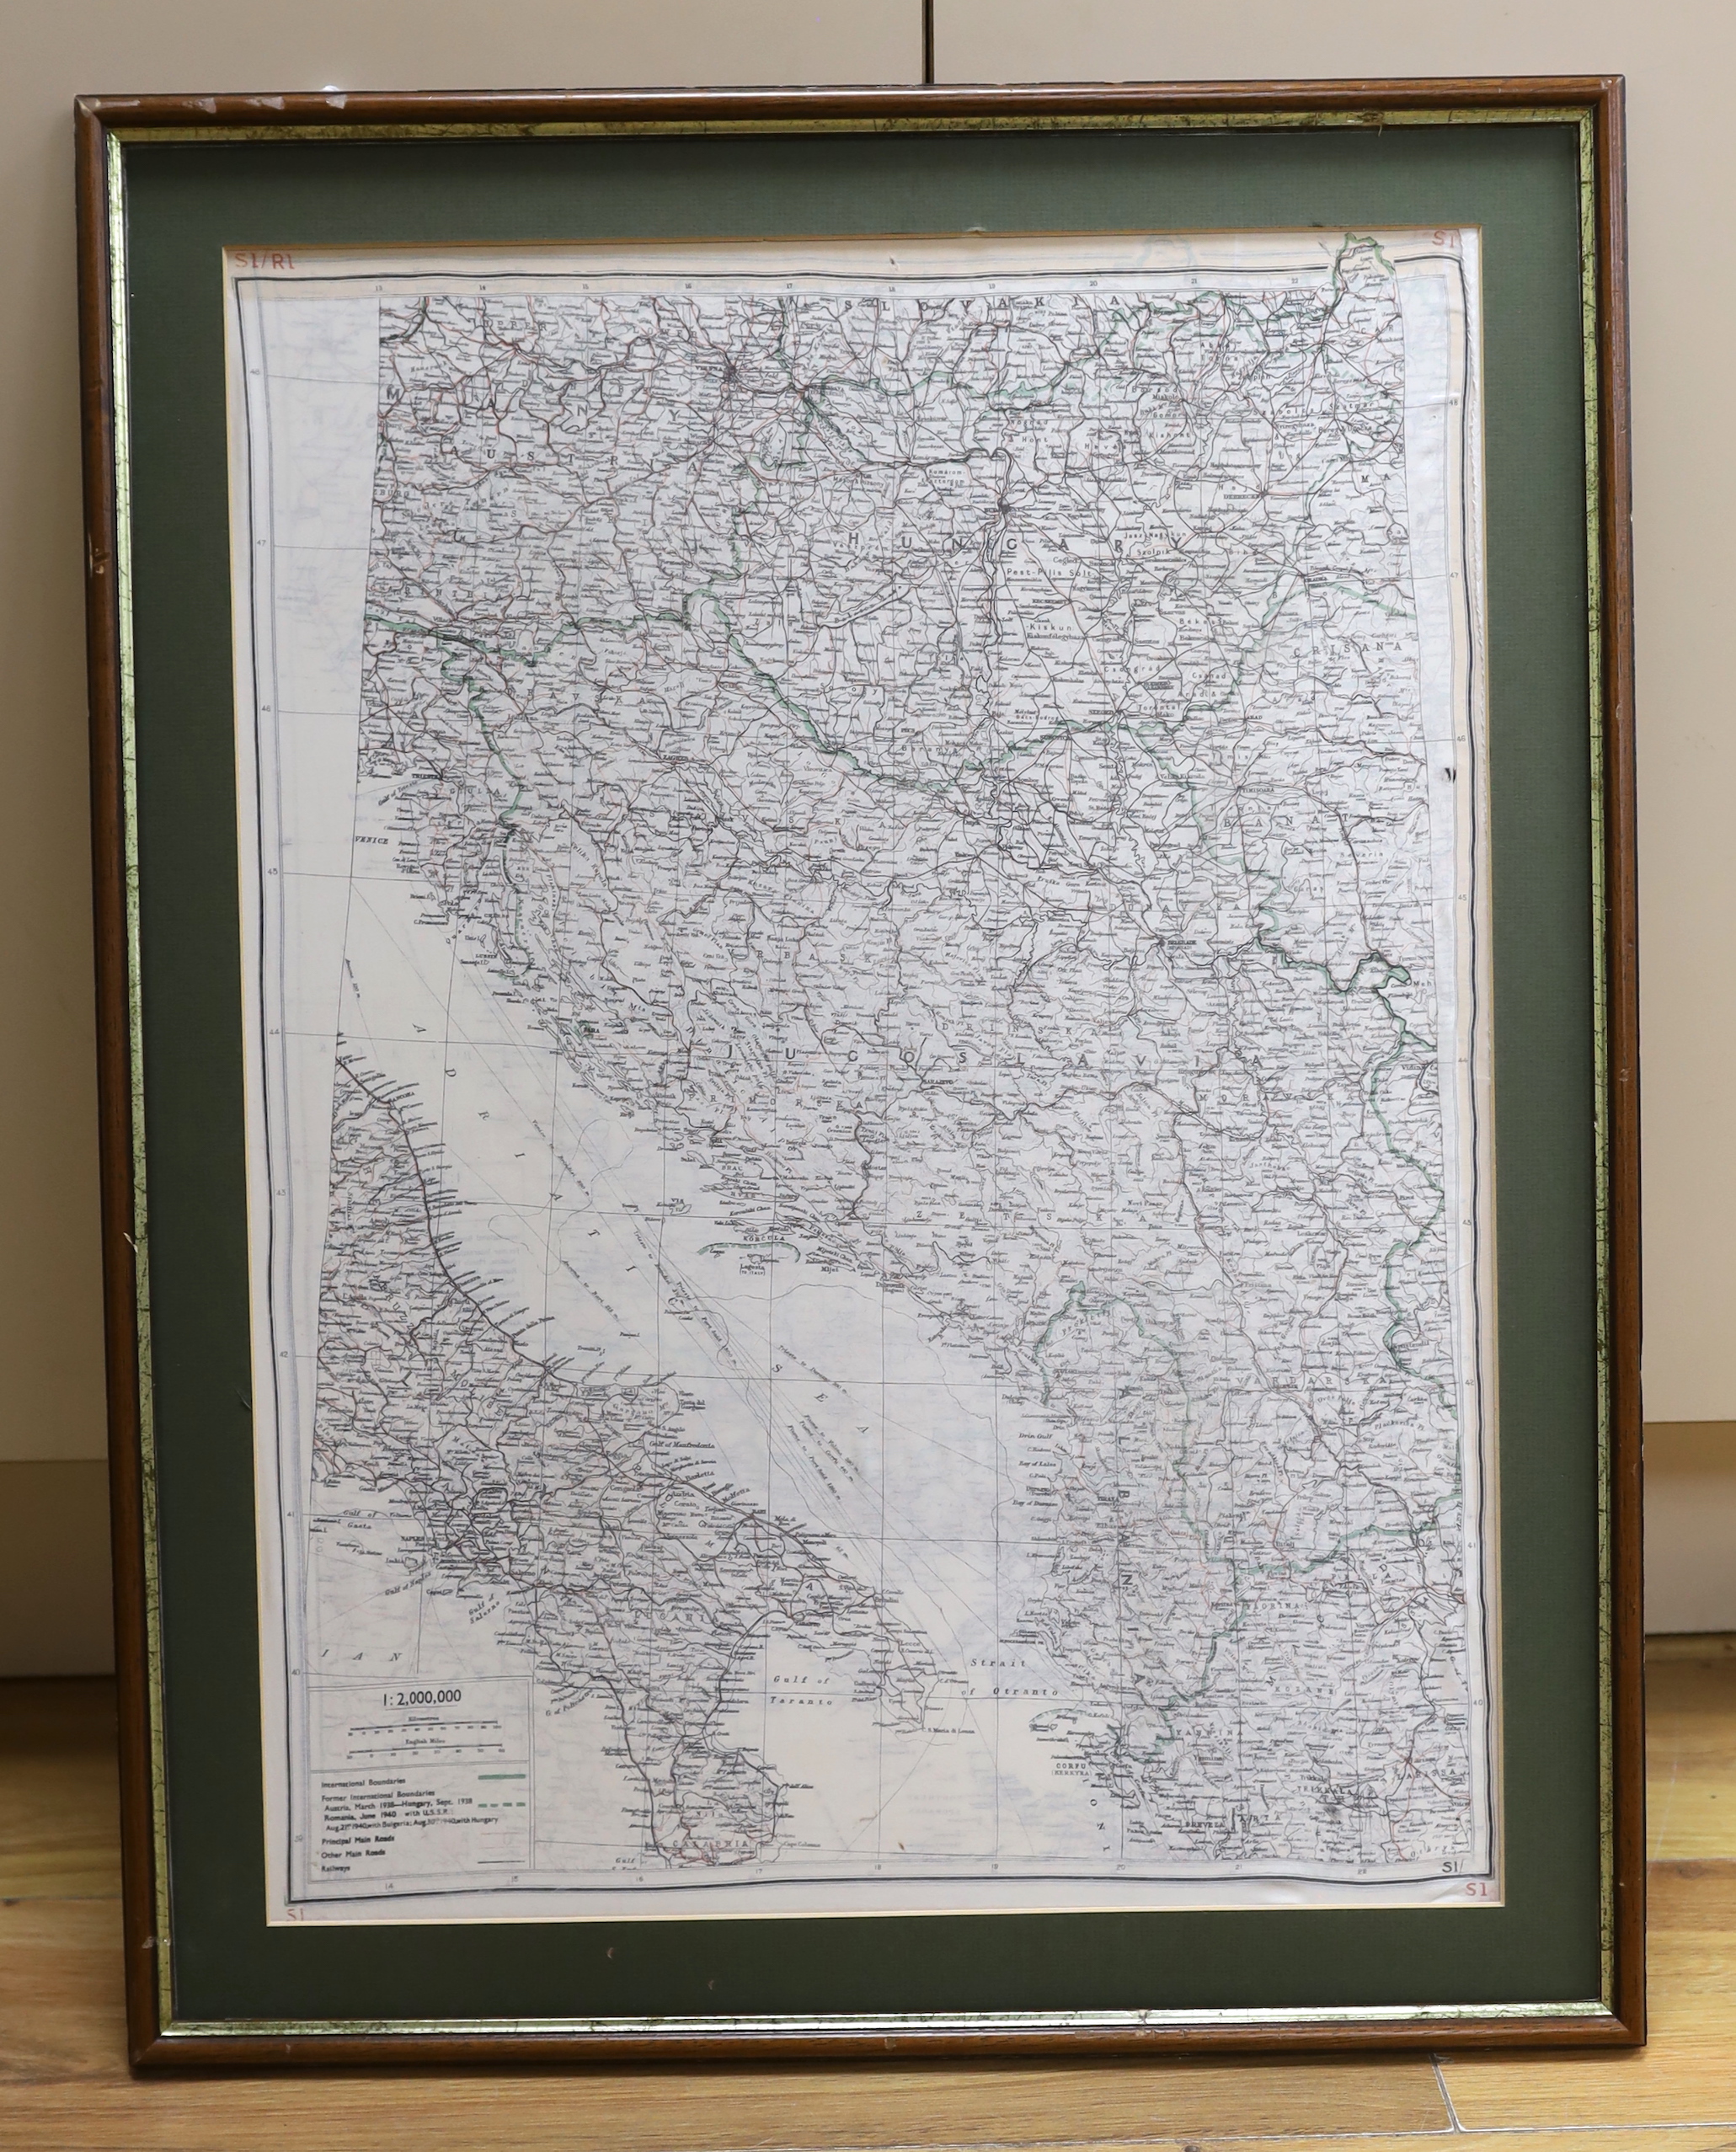 Three silk maps, former international boundaries, Austria, Hungary and Romania, 59 x 44cm, one framed